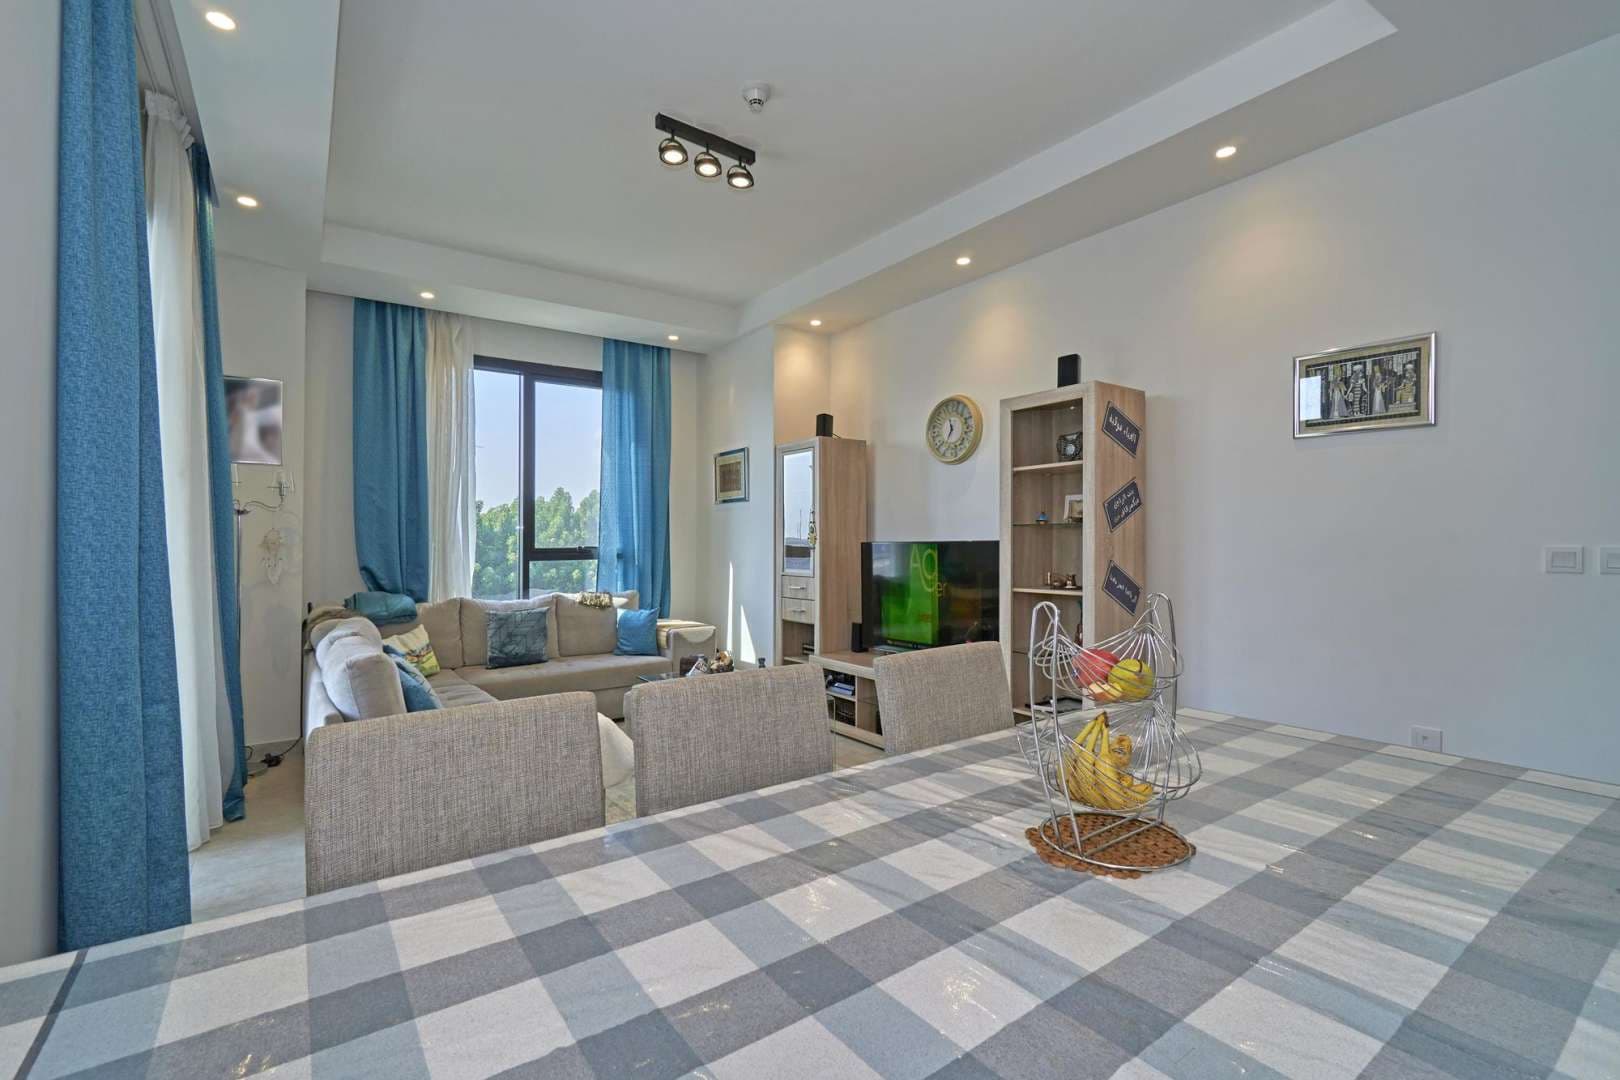 2 Bedroom Apartment For Sale Hyati Residence Lp05424 25339d606c144a00.jpg